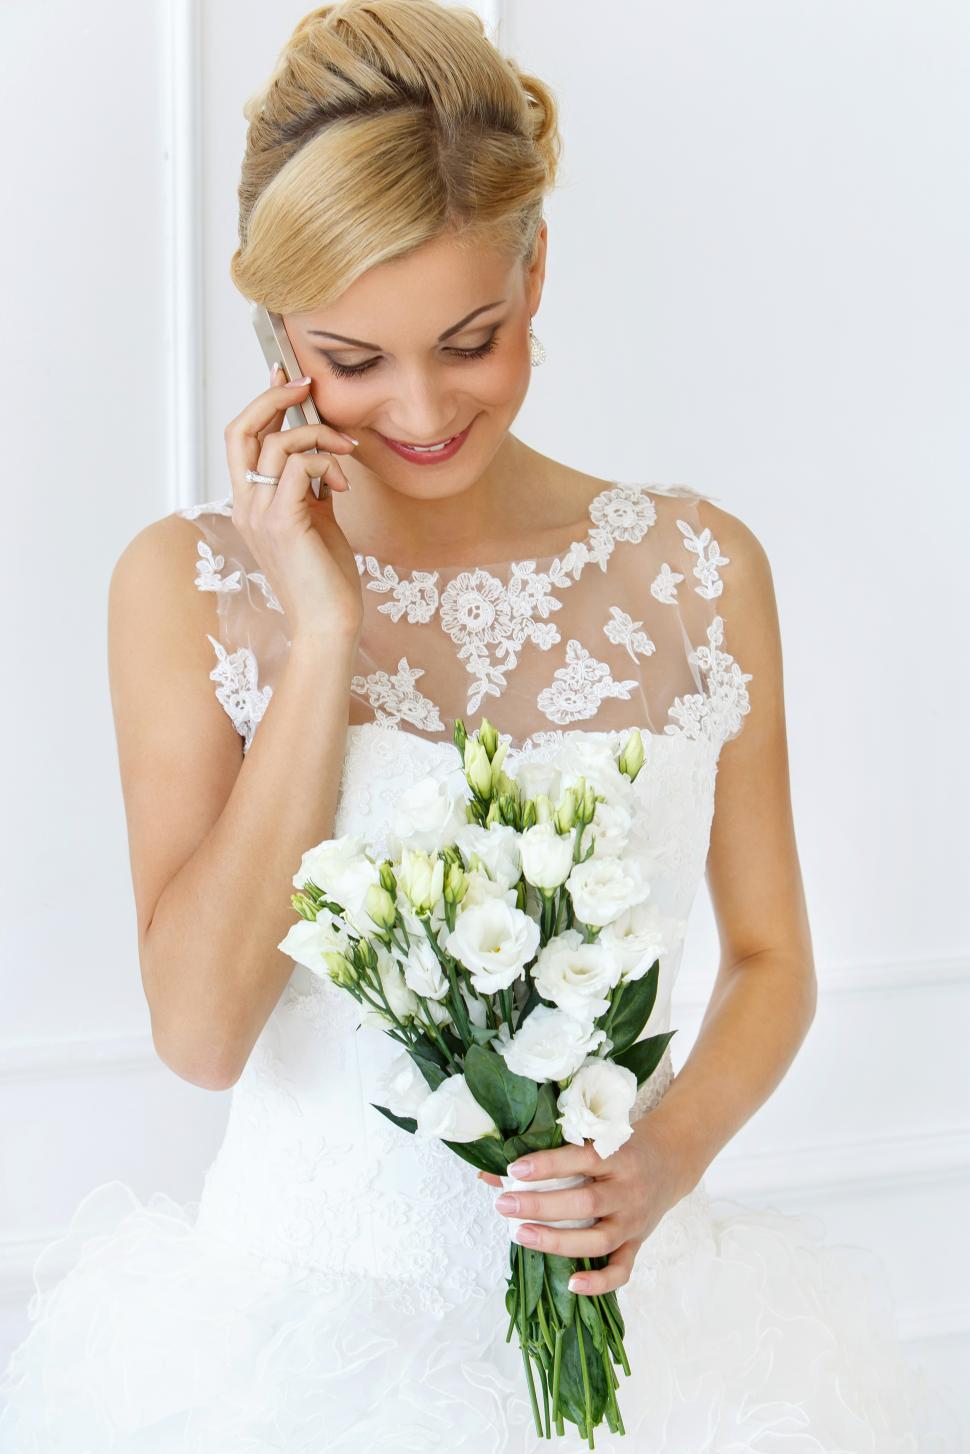 Free Image of Wedding. Beautiful bride talking on the phone 